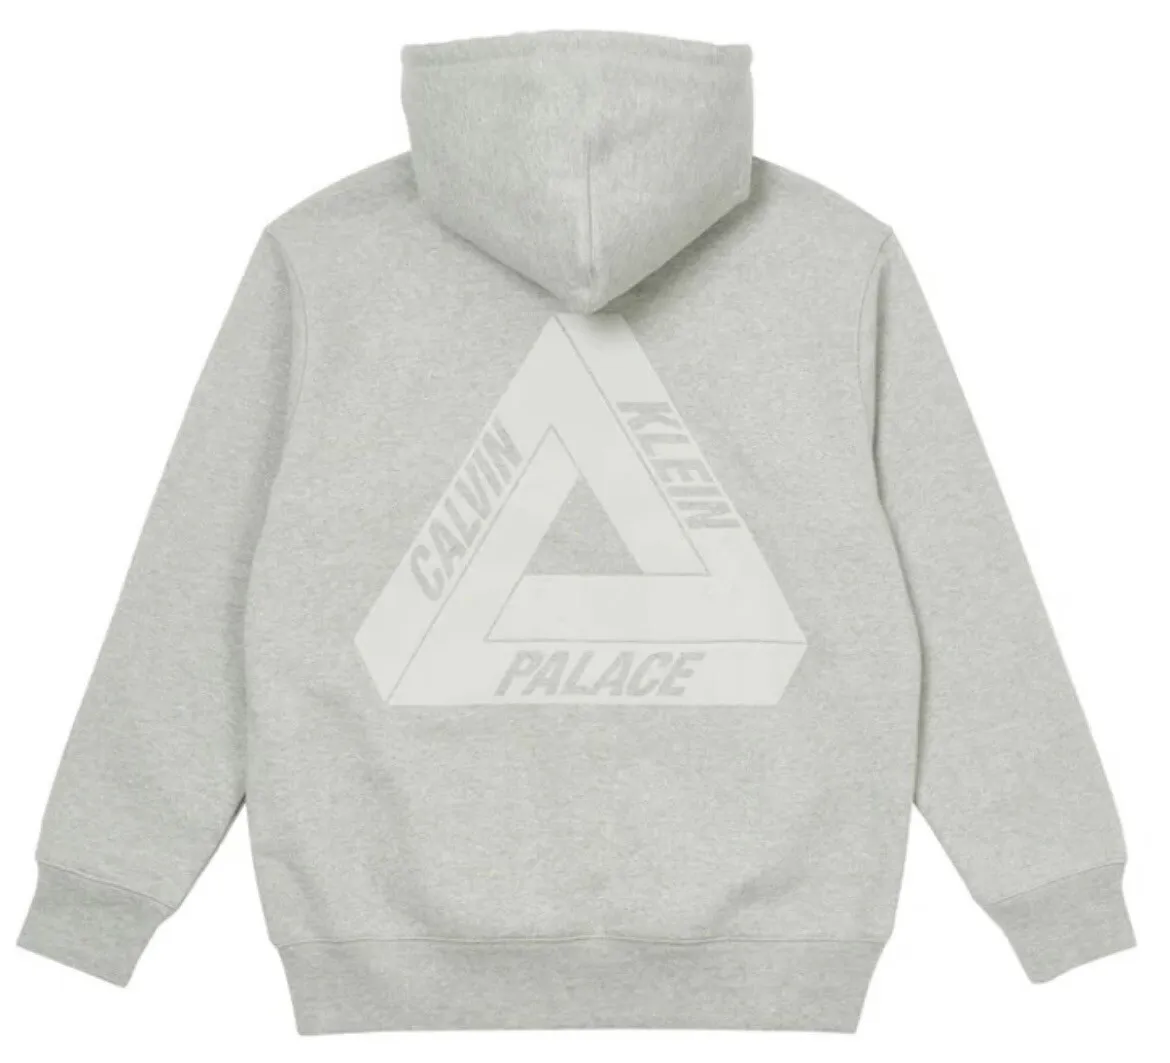 Palace ck1 tri-ferg hoodie - light marl grey - medium